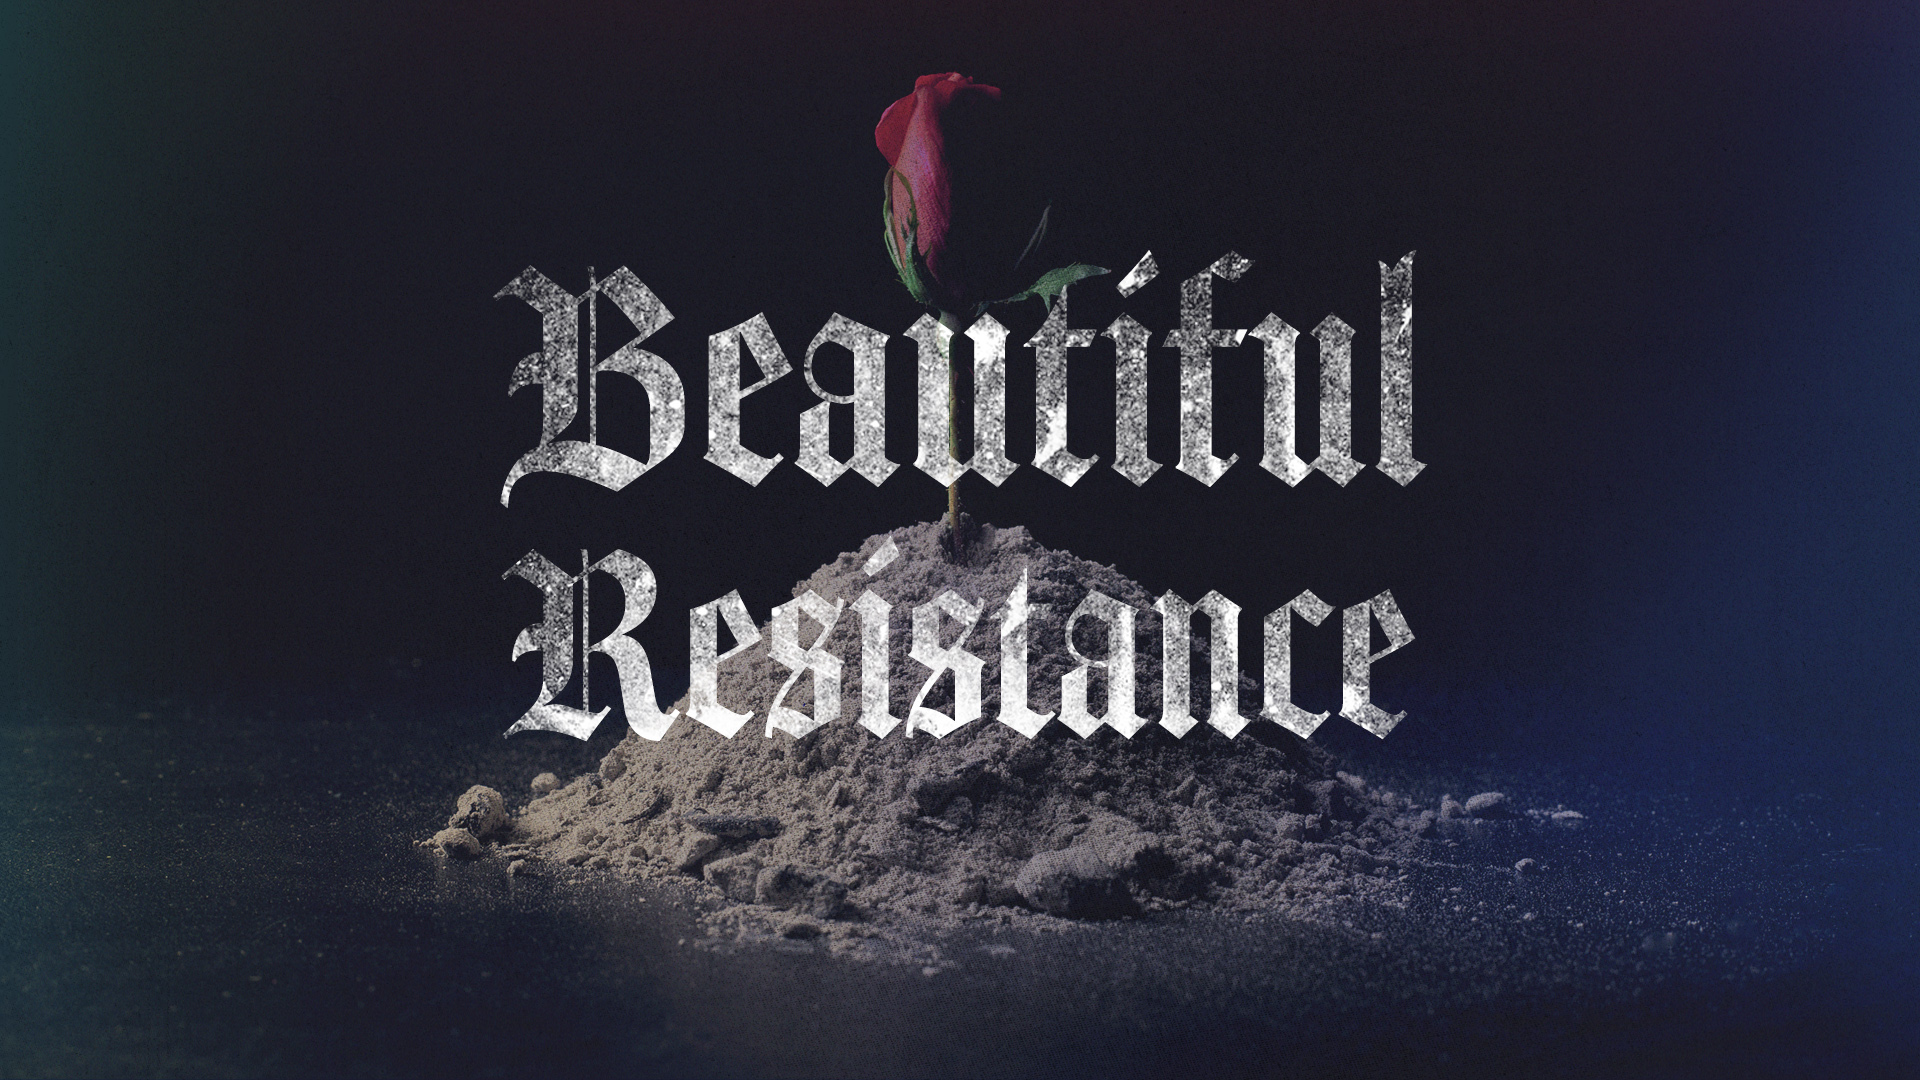 Beautiful Resistance